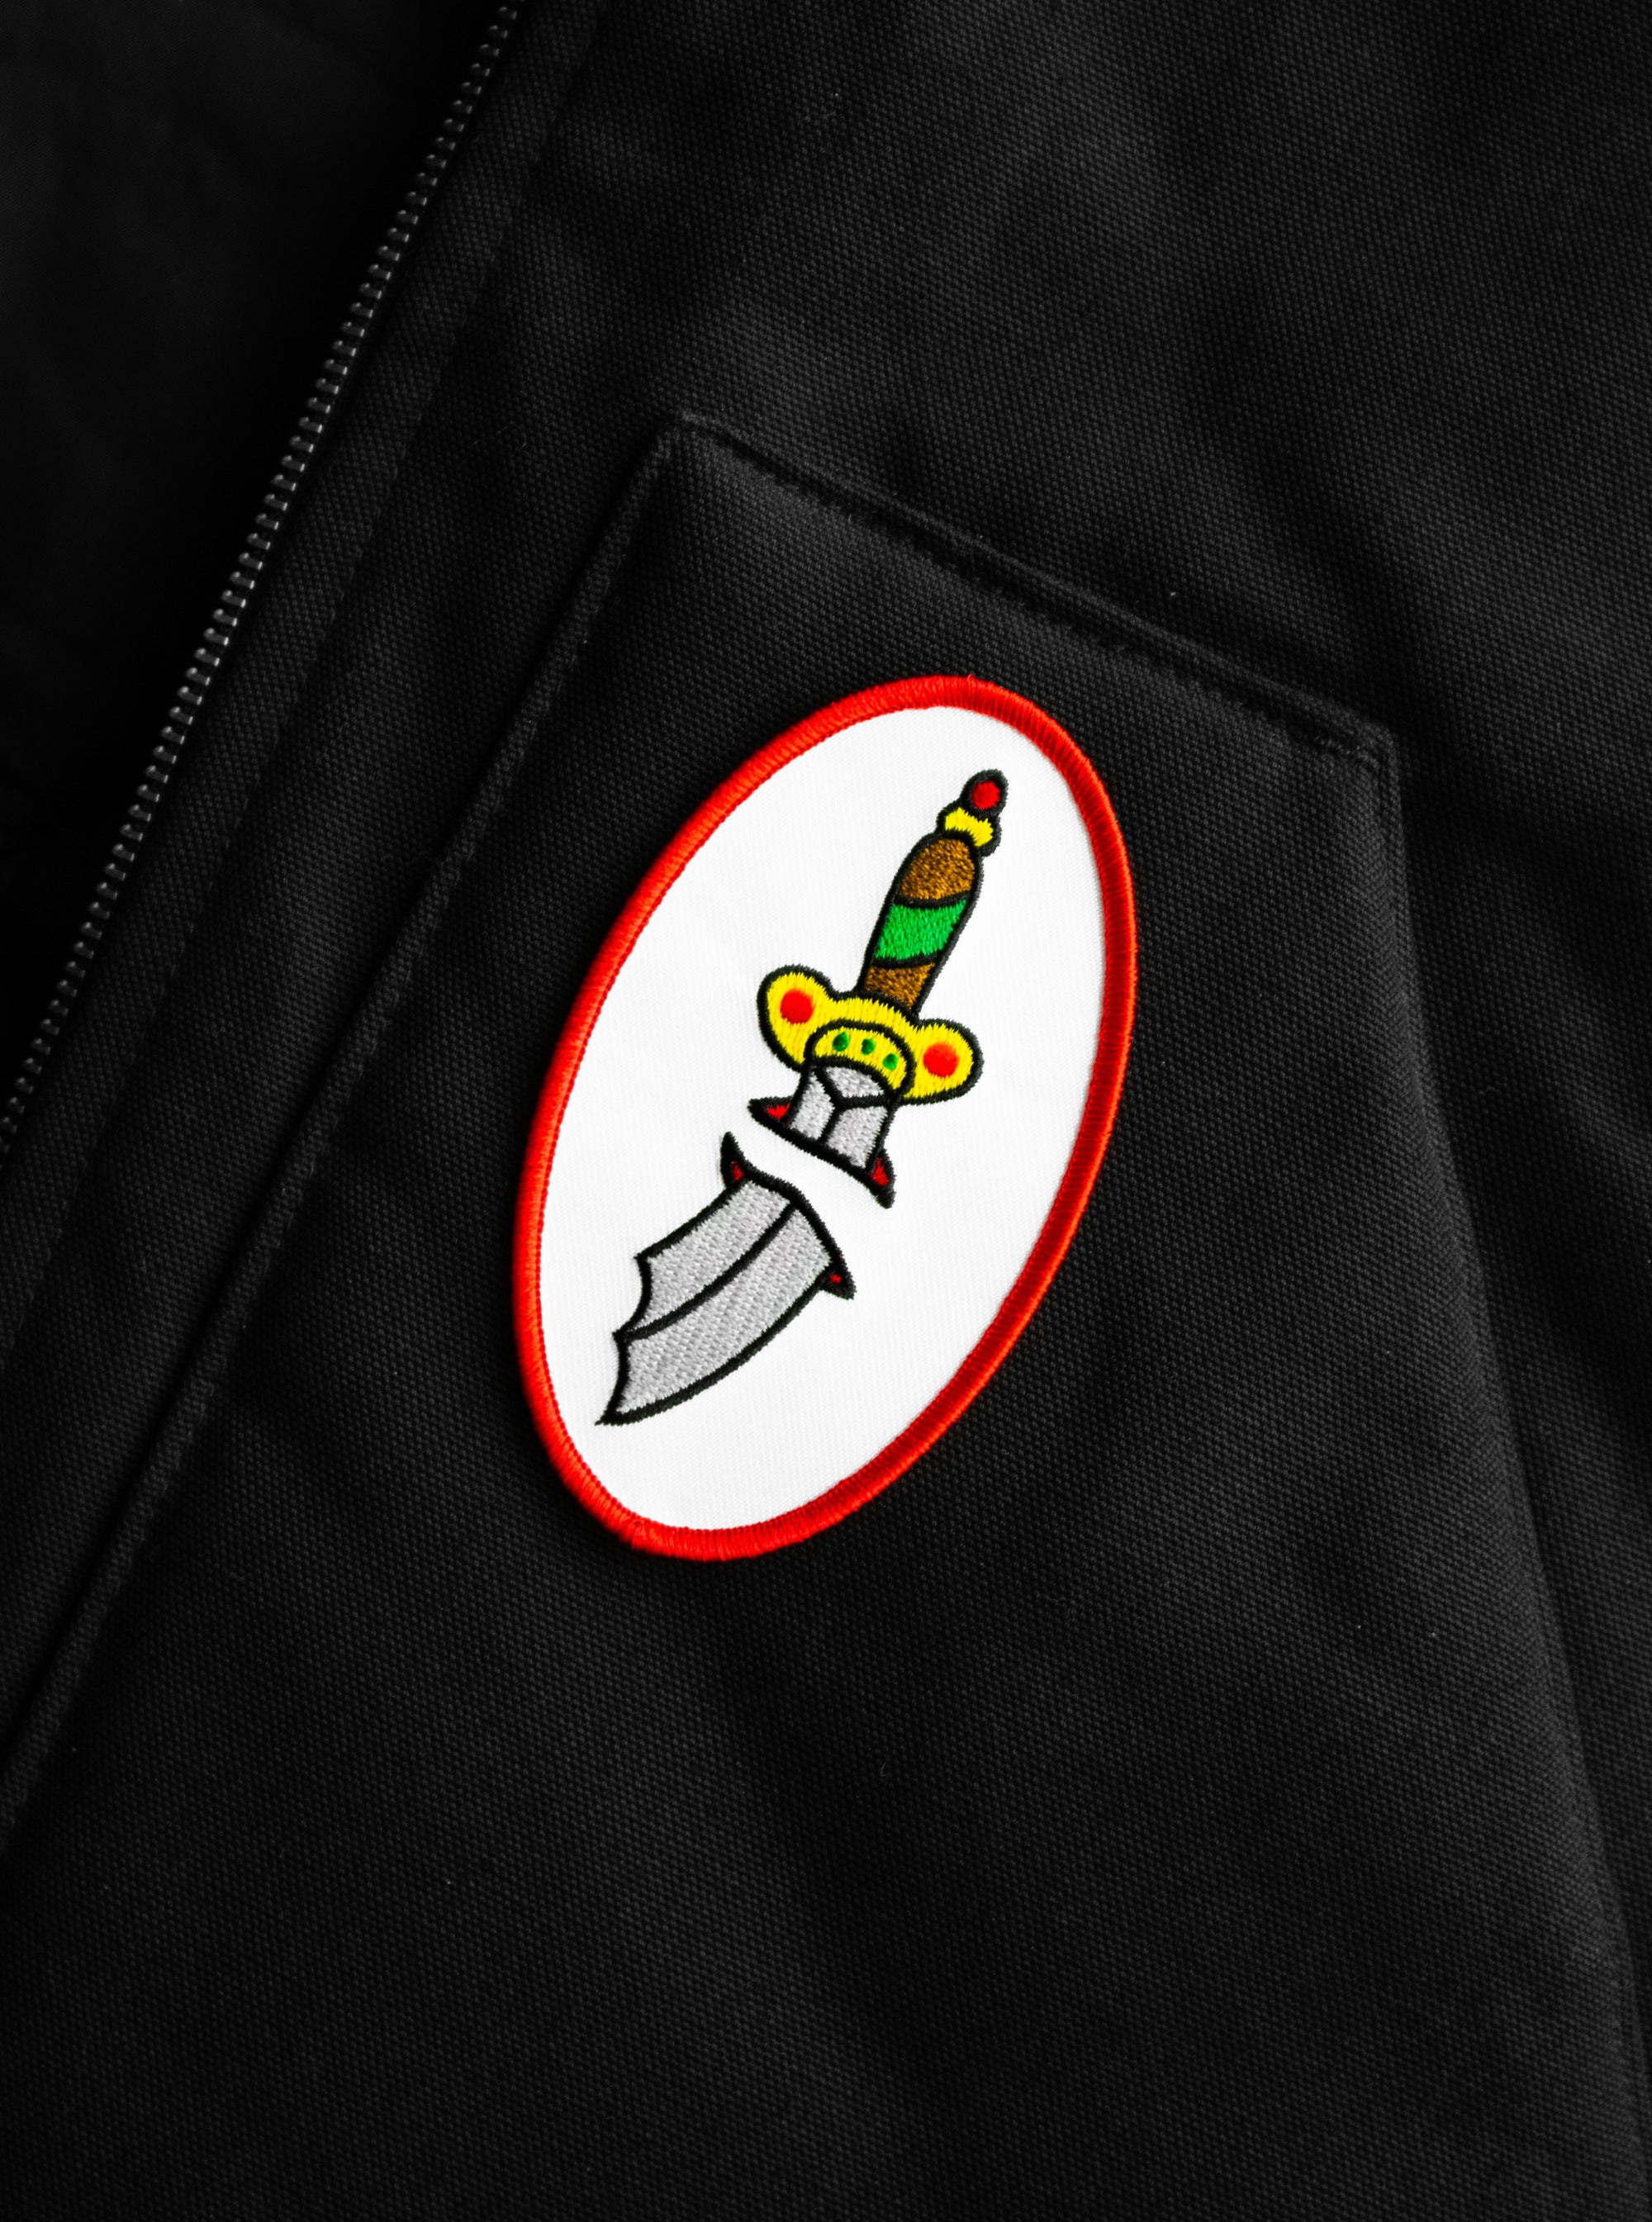 The "Sword" Patch on a black canvas vest.